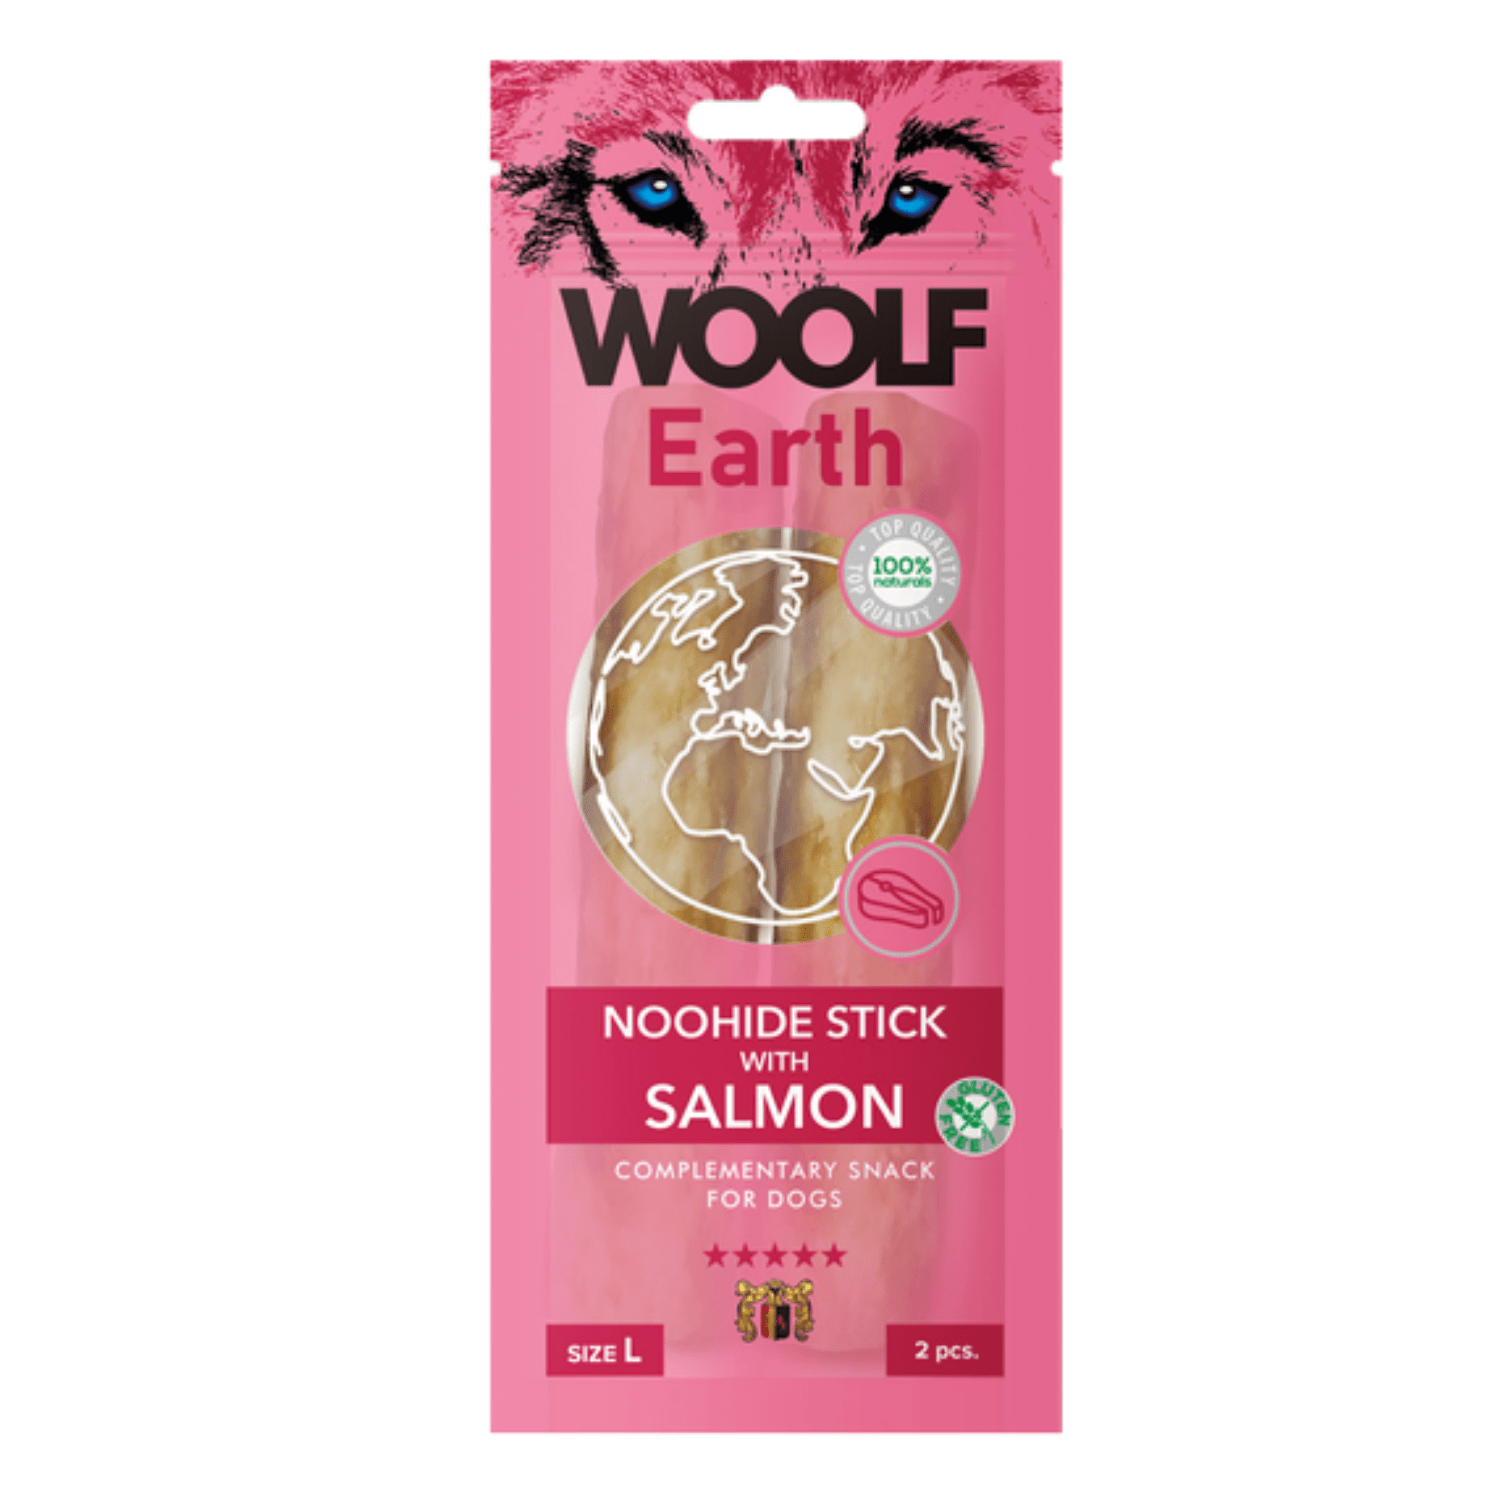 Woolf Earth Noohide Stick 85g dla dużych psów - łosoś